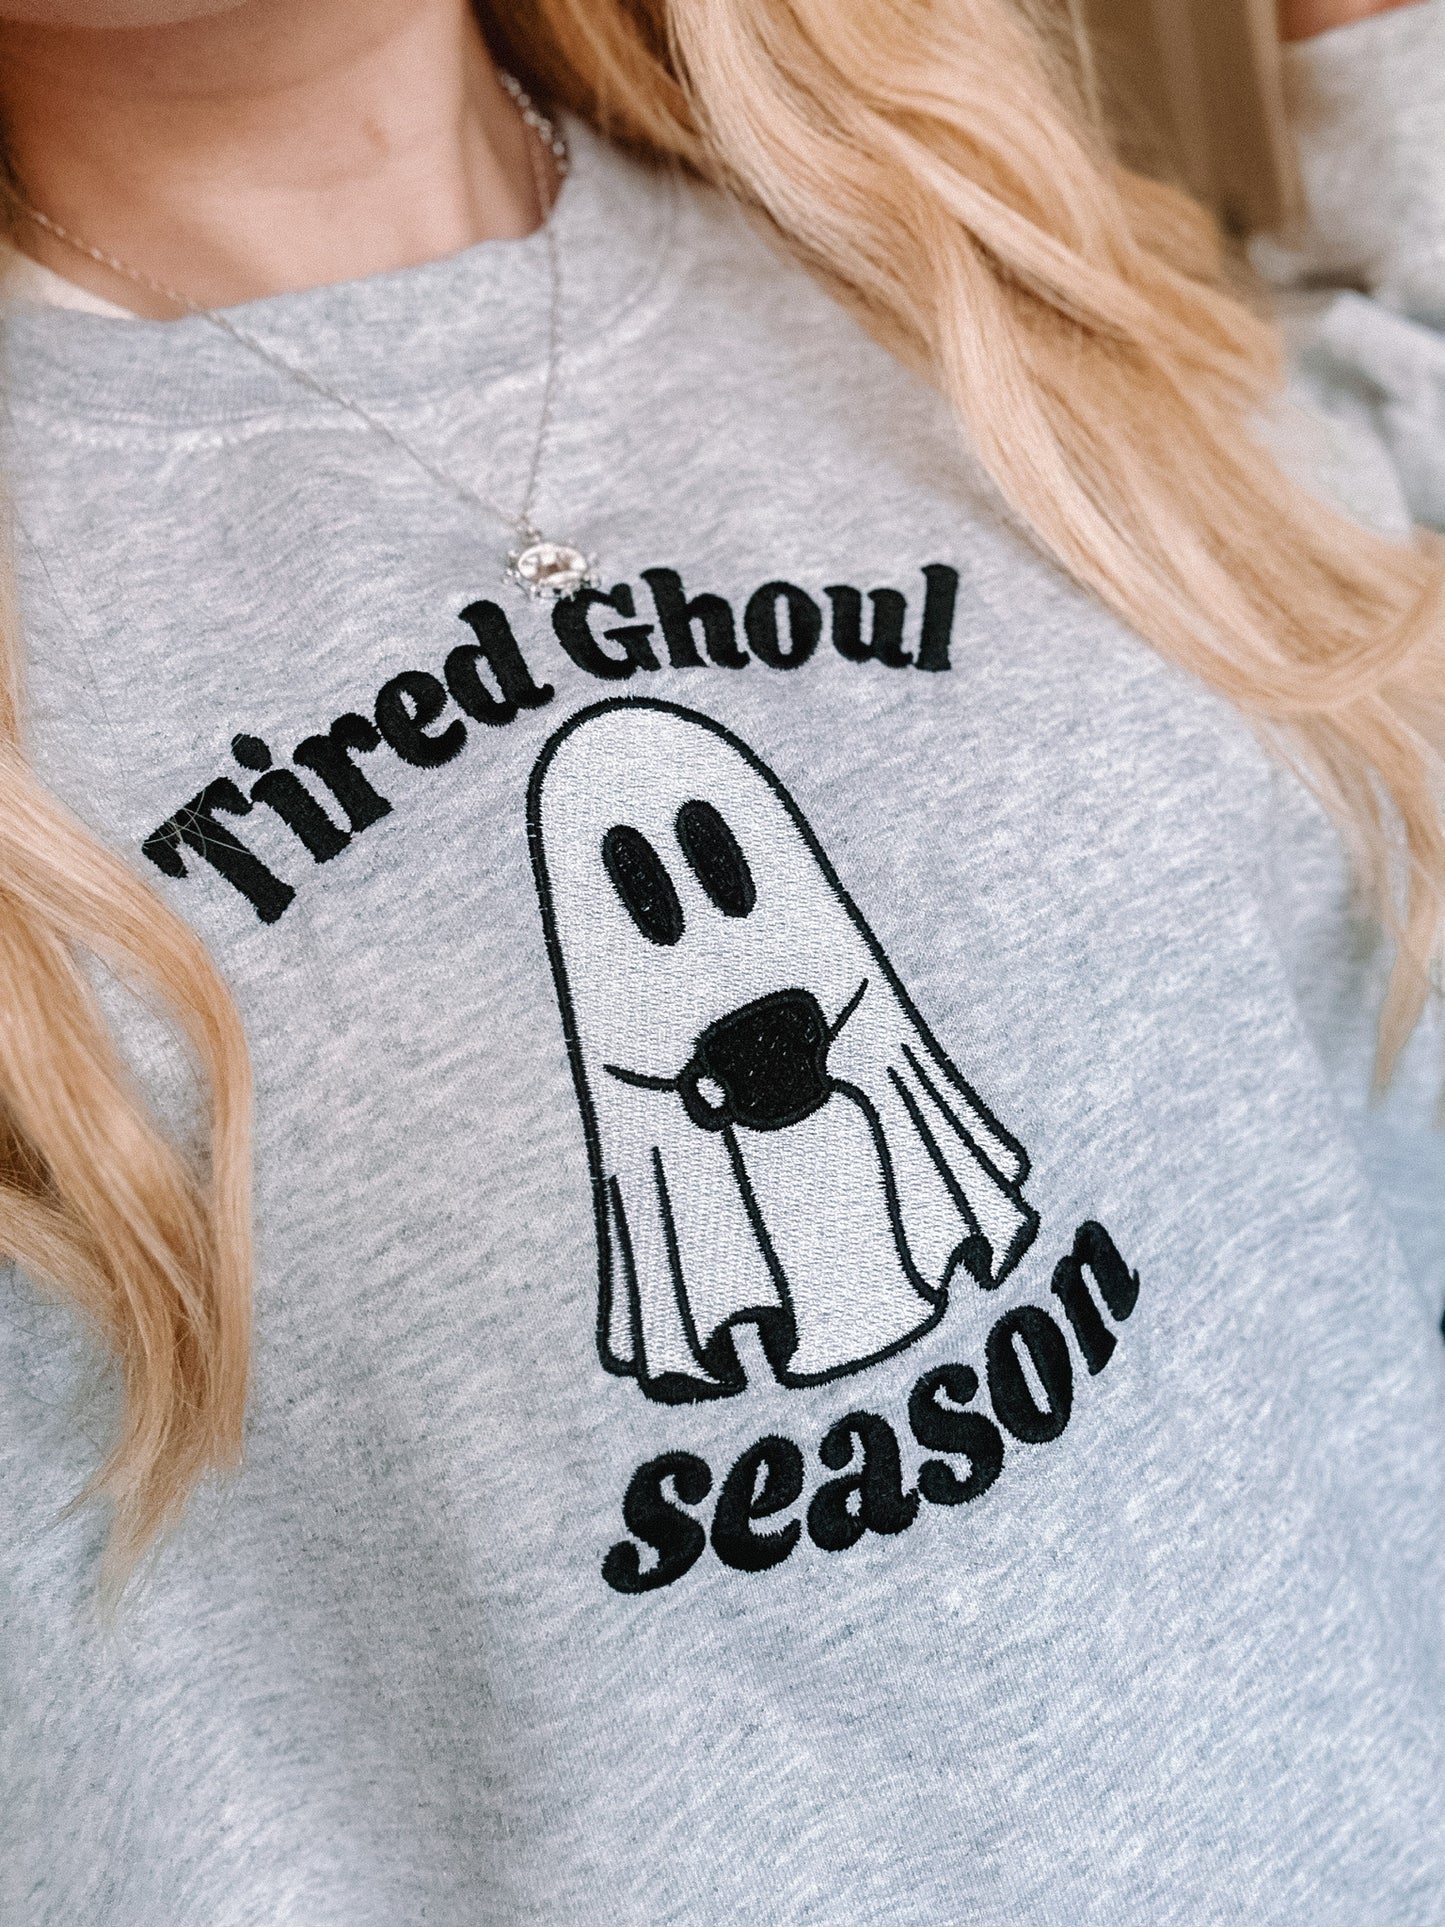 Tired Ghoul Season crewneck sweatshirt